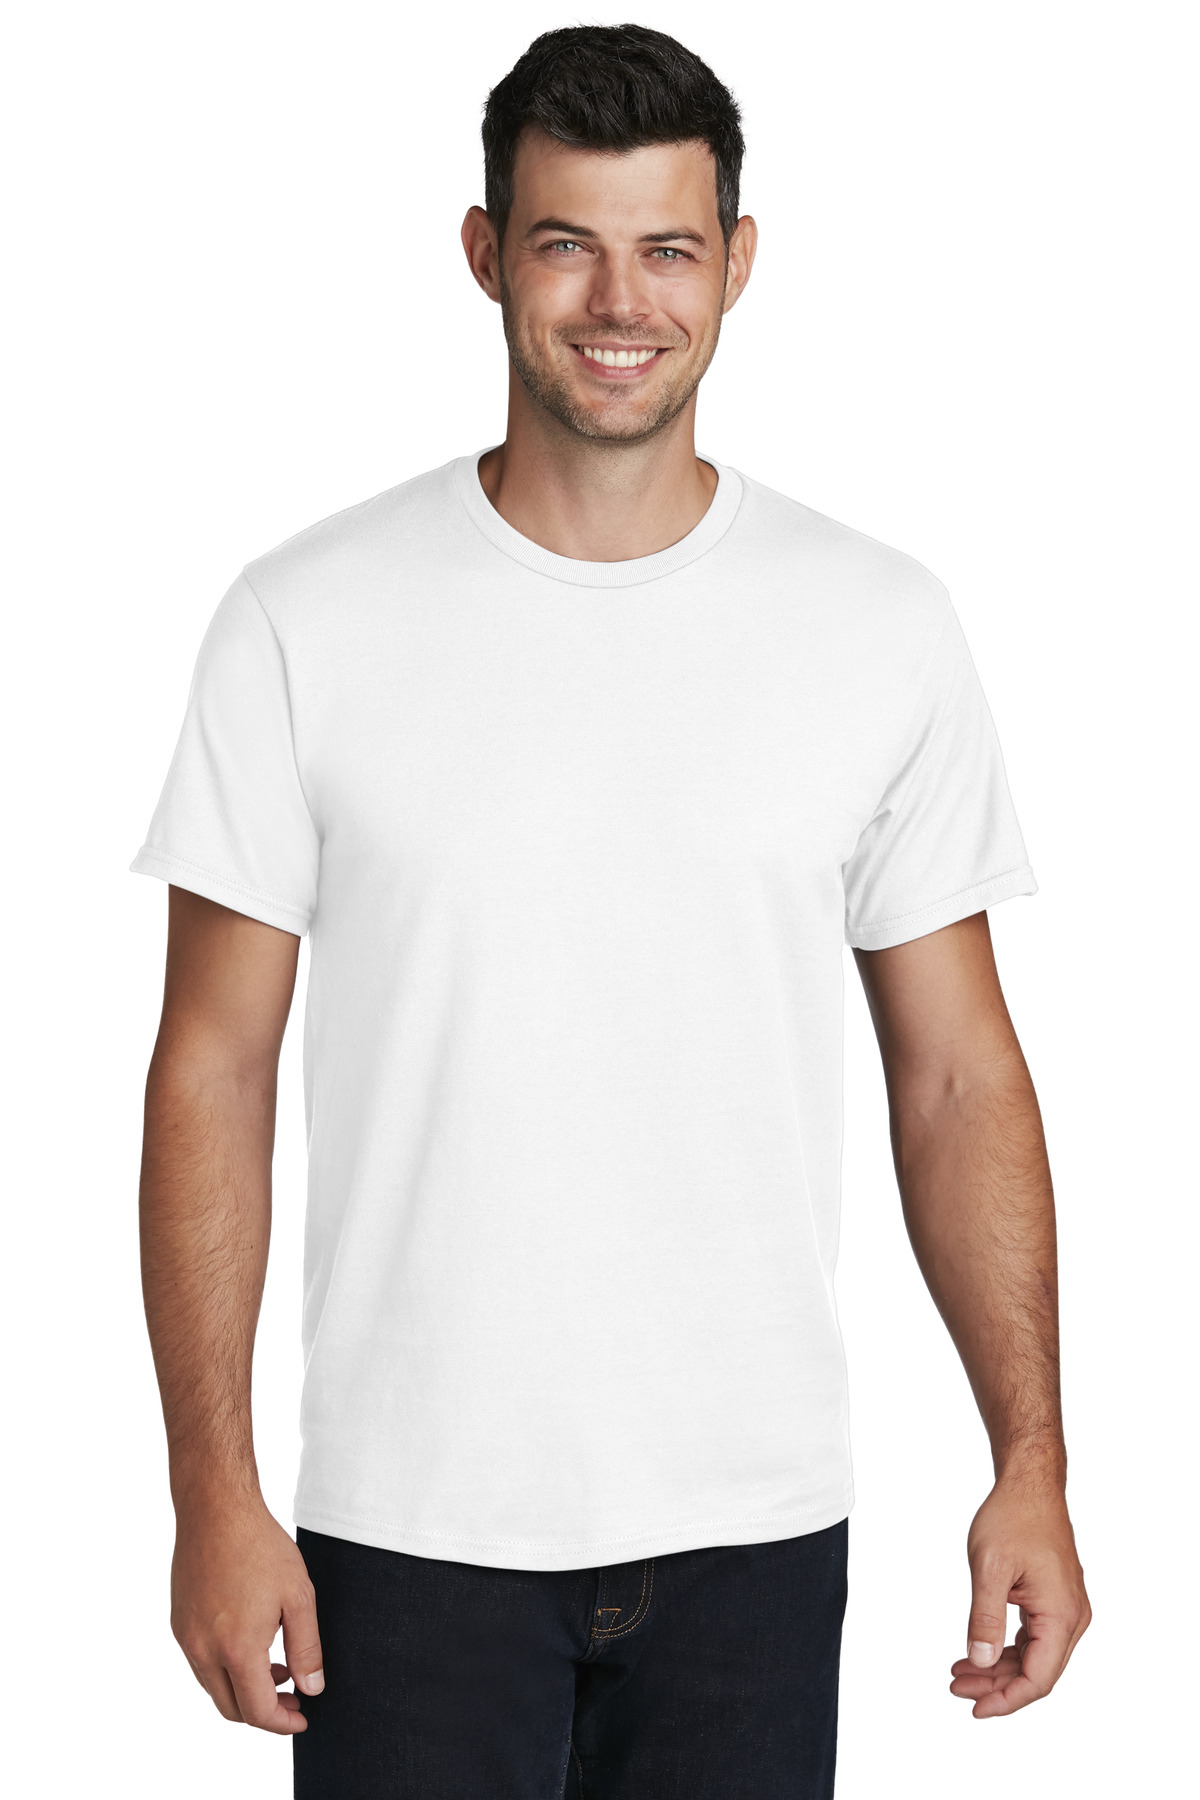 Port & Company Hospitality T-Shirts ® - Ring Spun Cotton Tee.-Port & Company